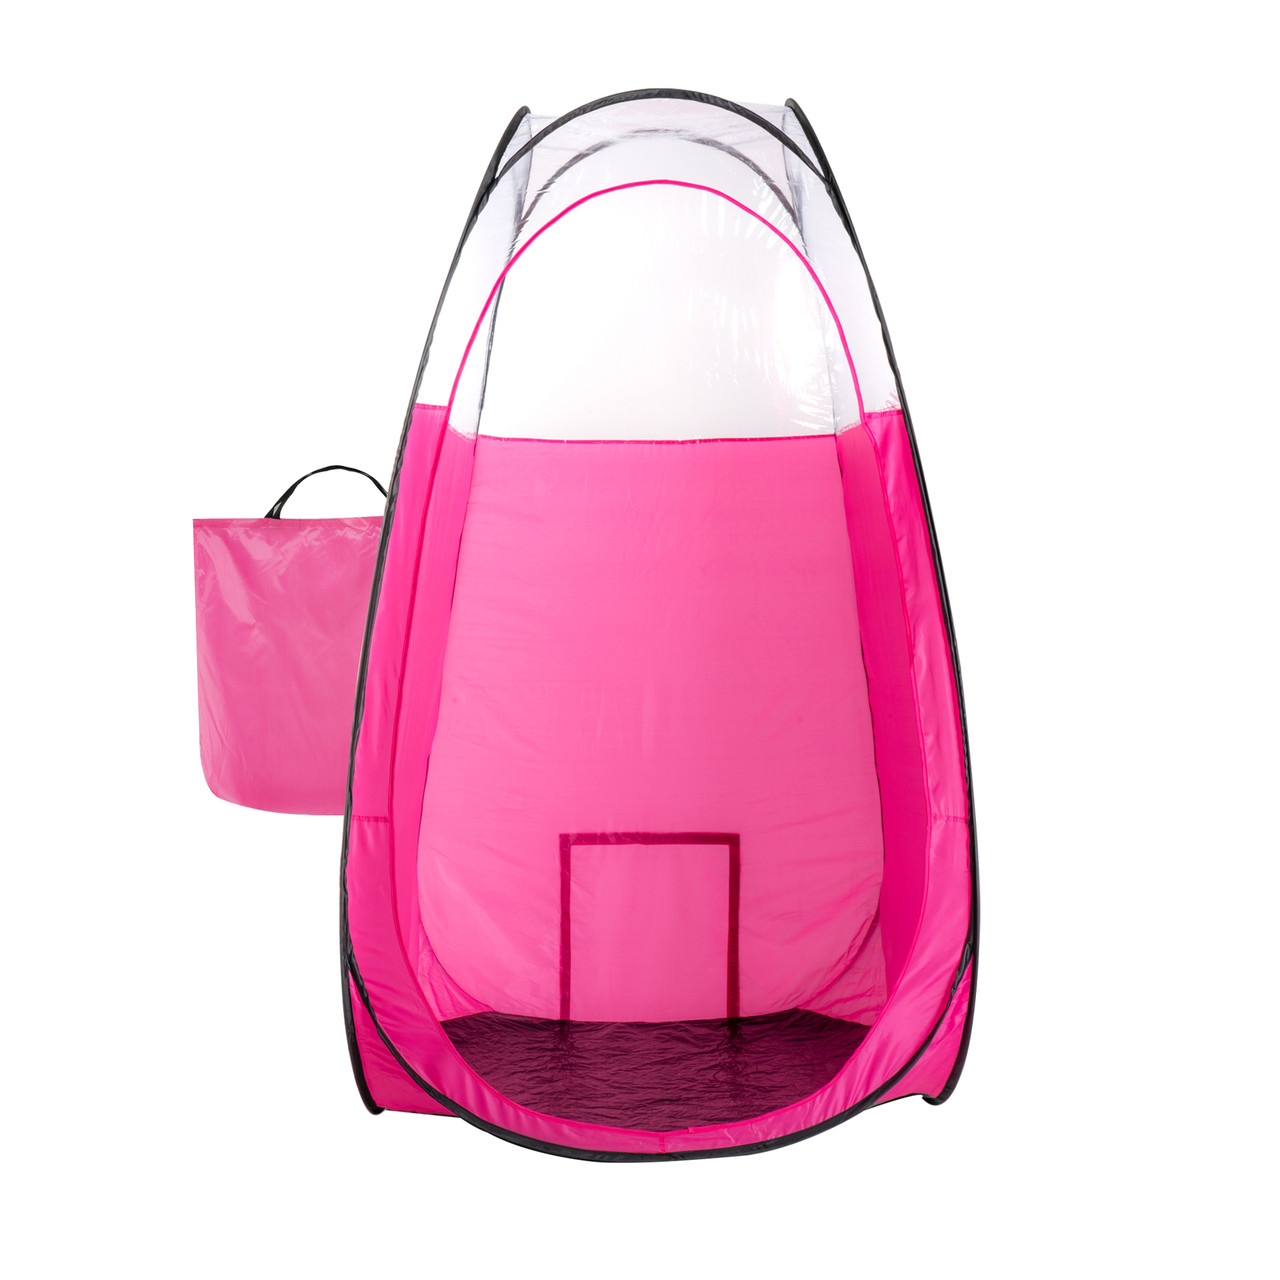 Pink Pop Up Spray Tanning Tent, spray tan tent